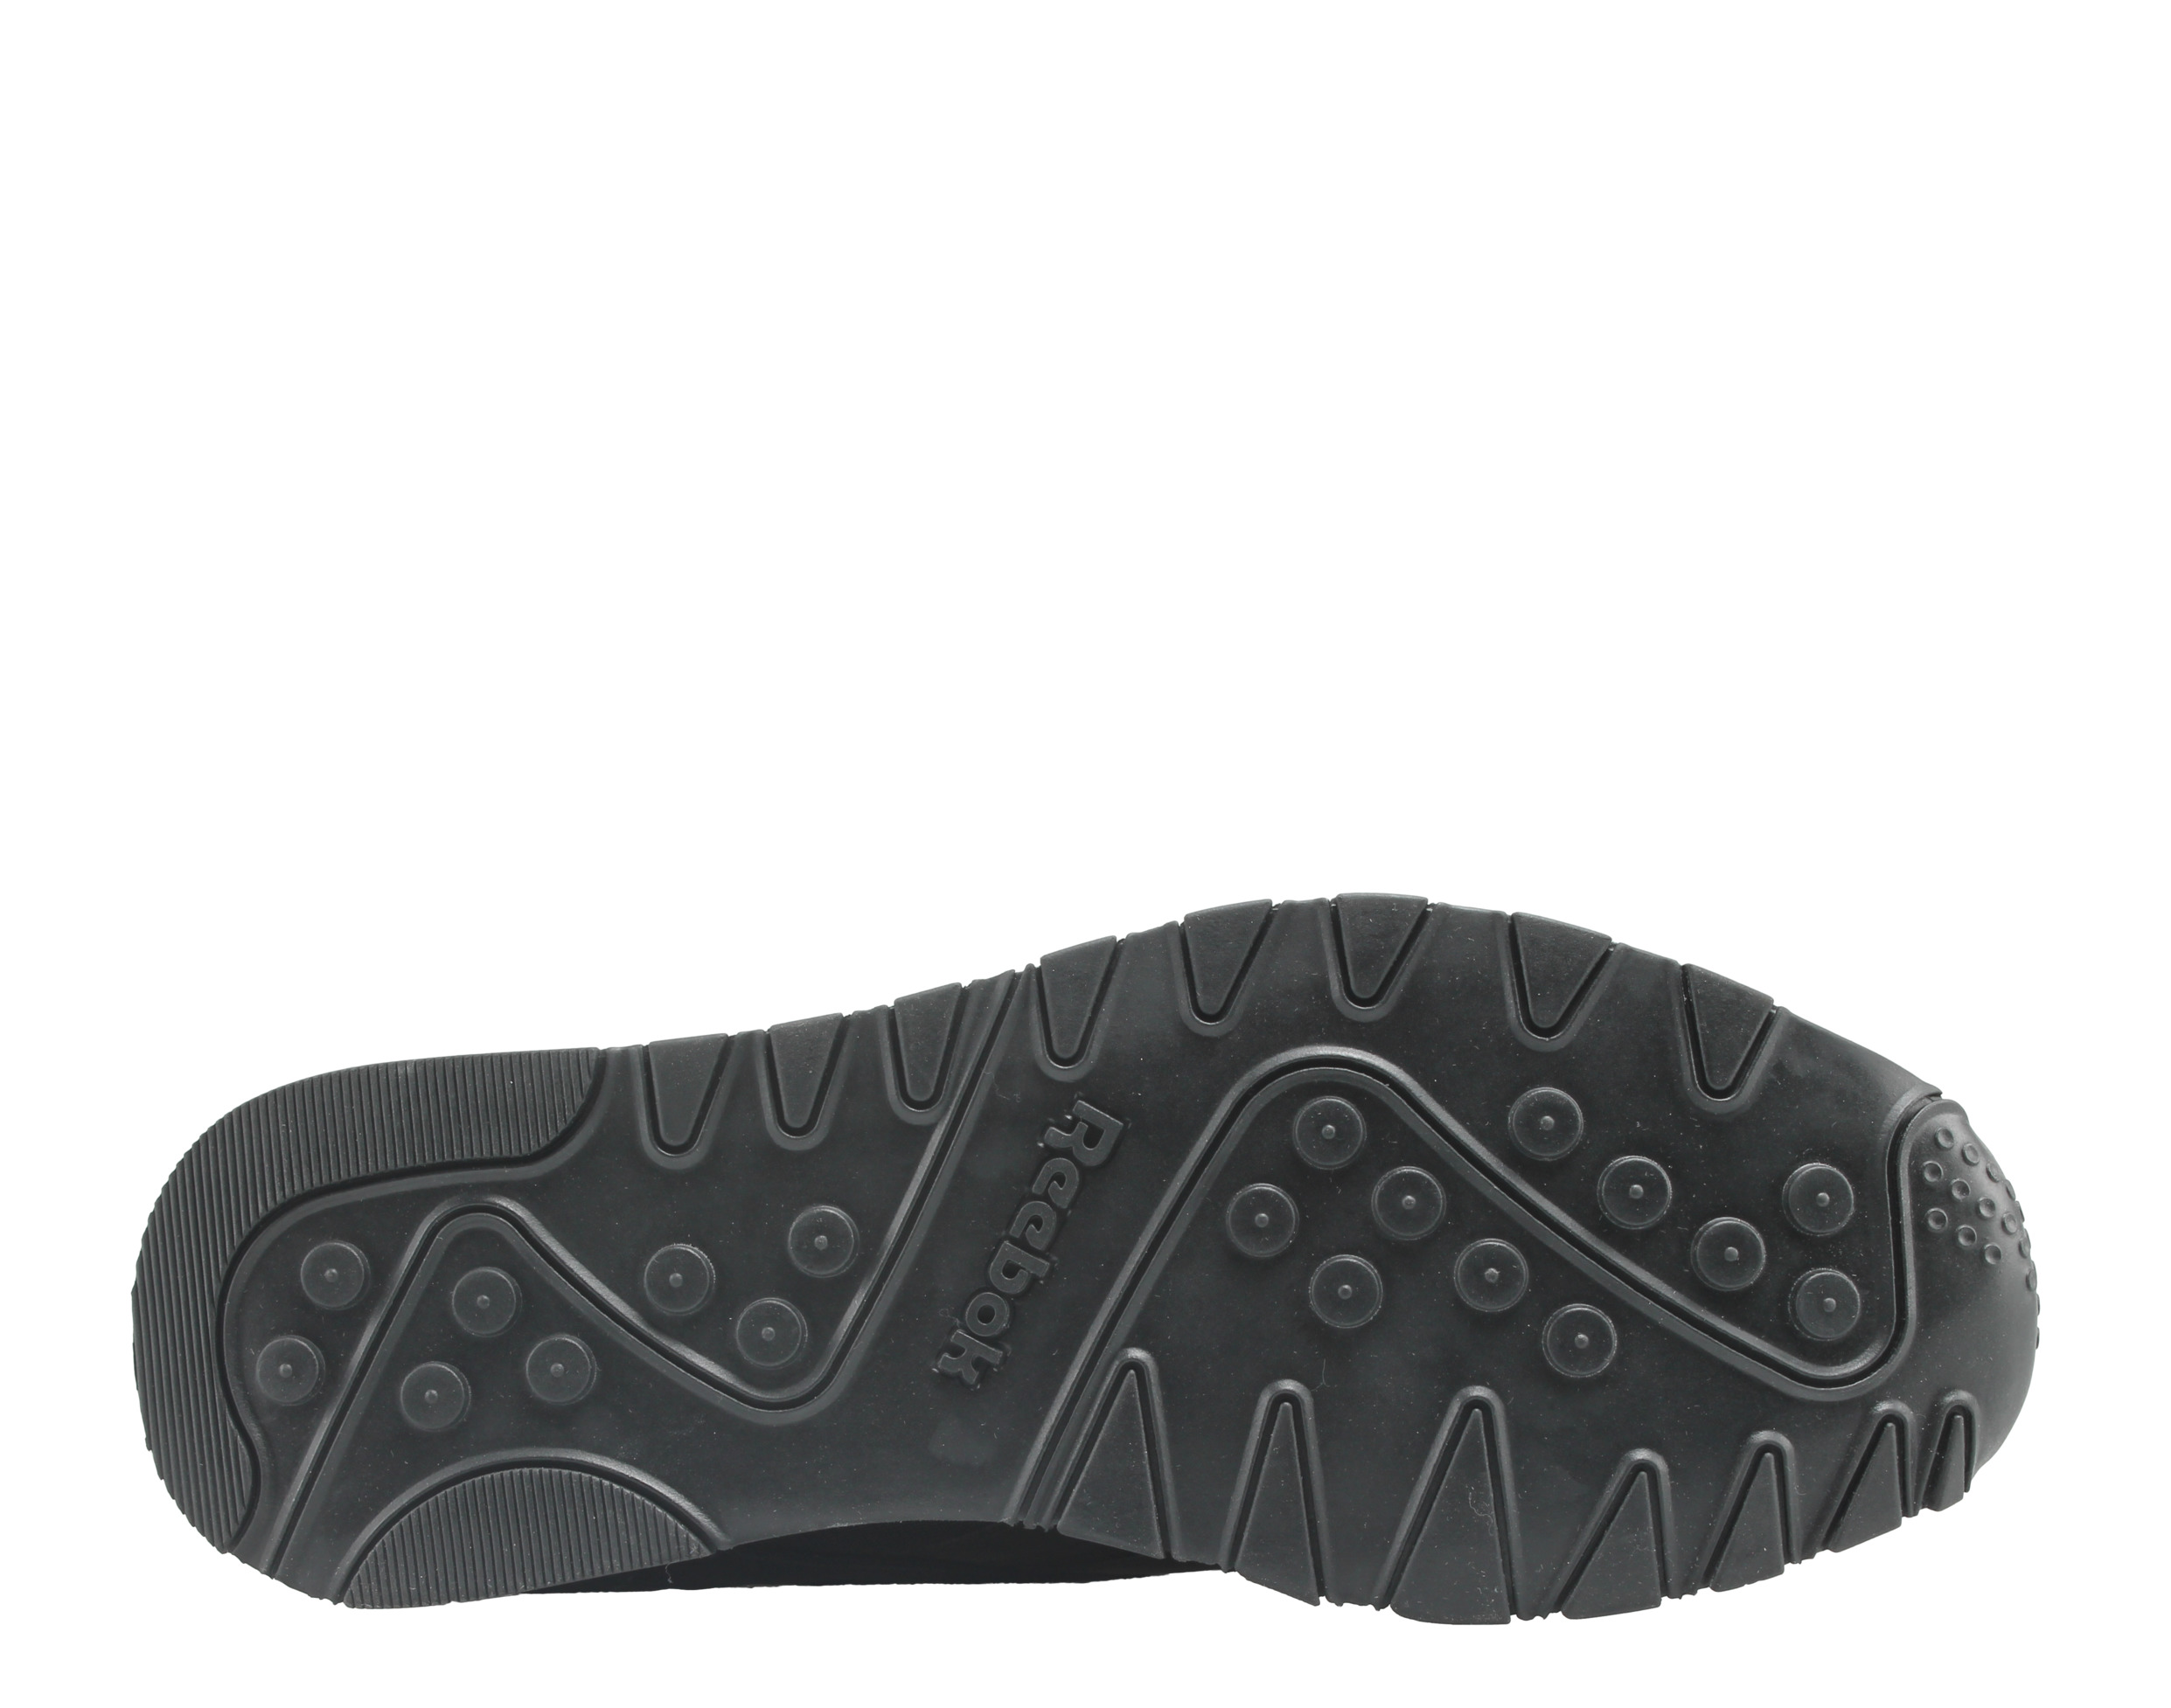 Reebok Classic Nylon Men's Running Shoes Size 11 - image 5 of 6